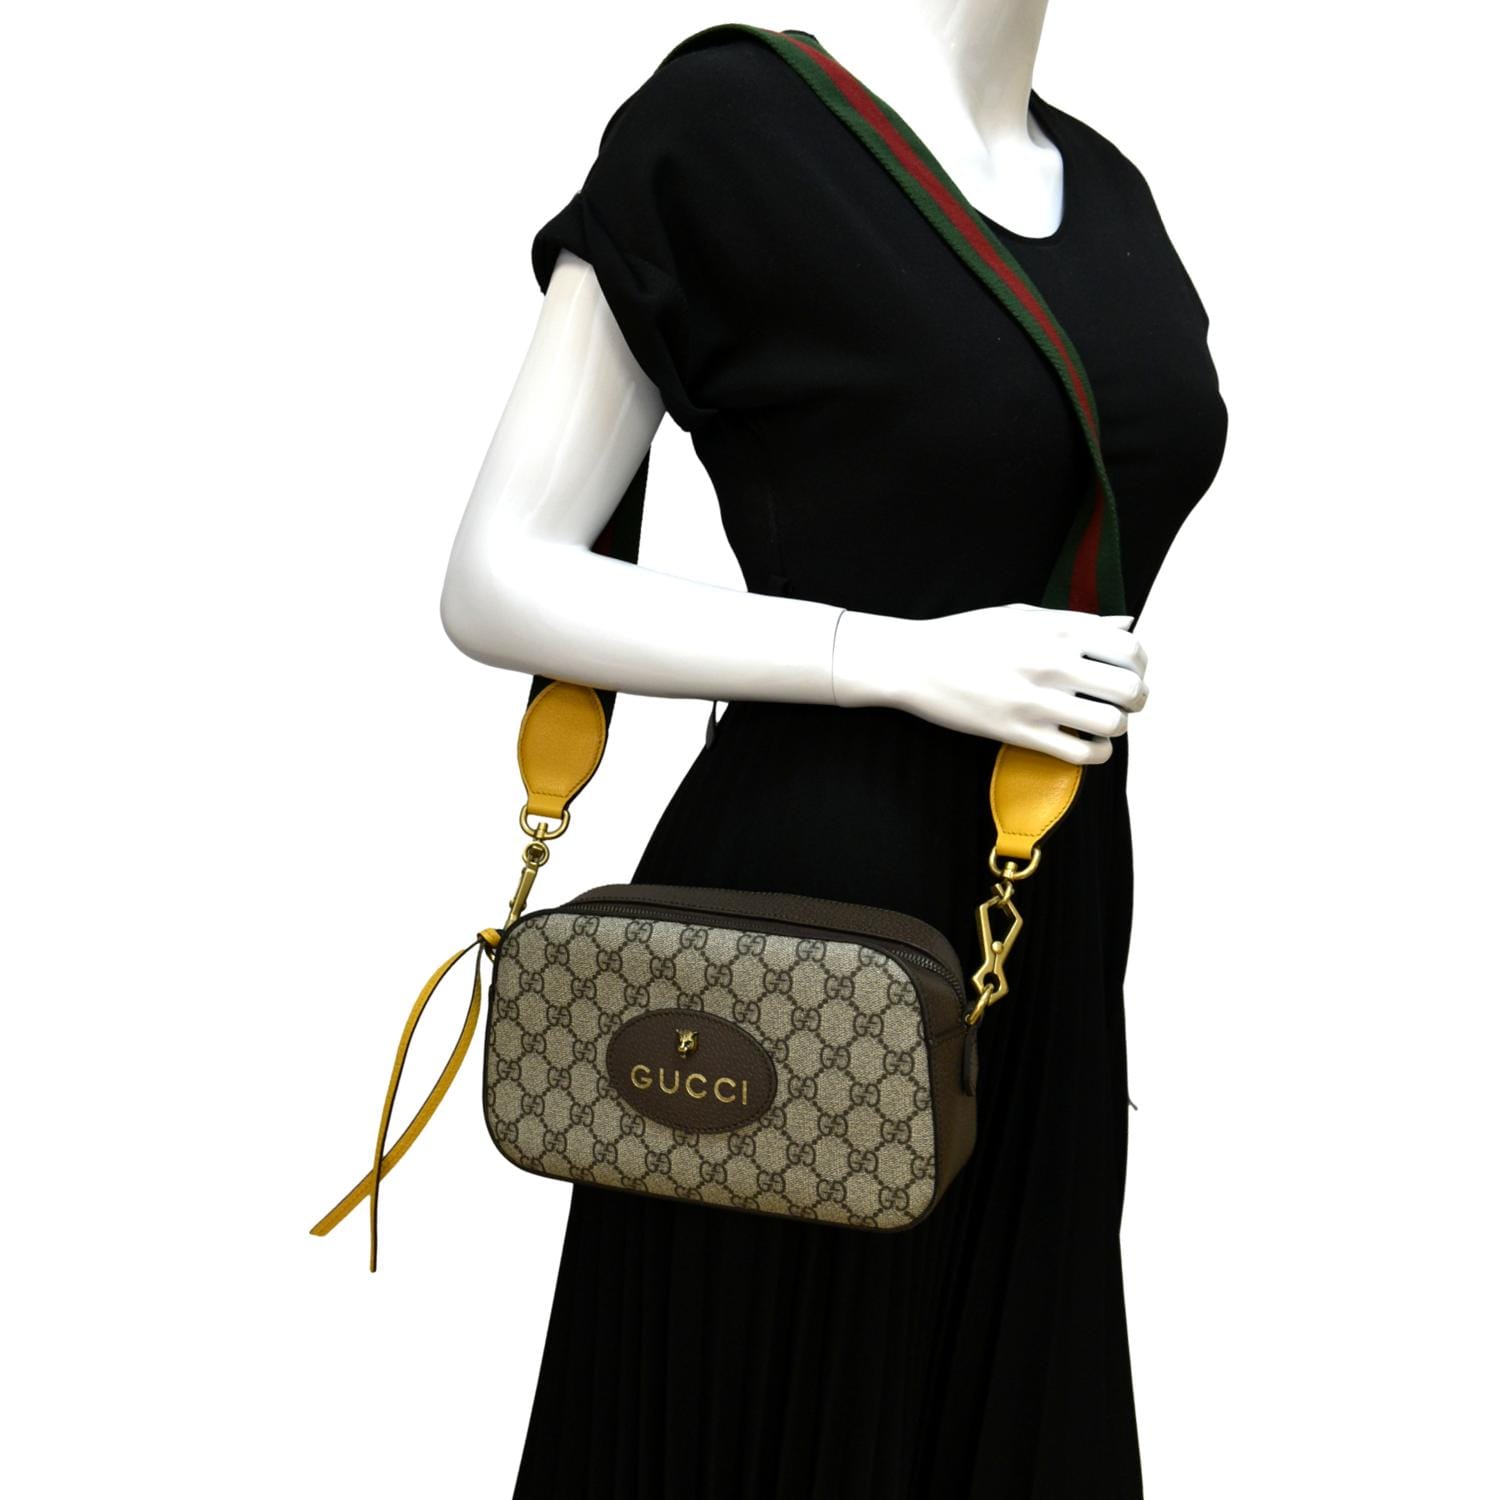 GG Supreme Messenger Bag in Brown - Gucci